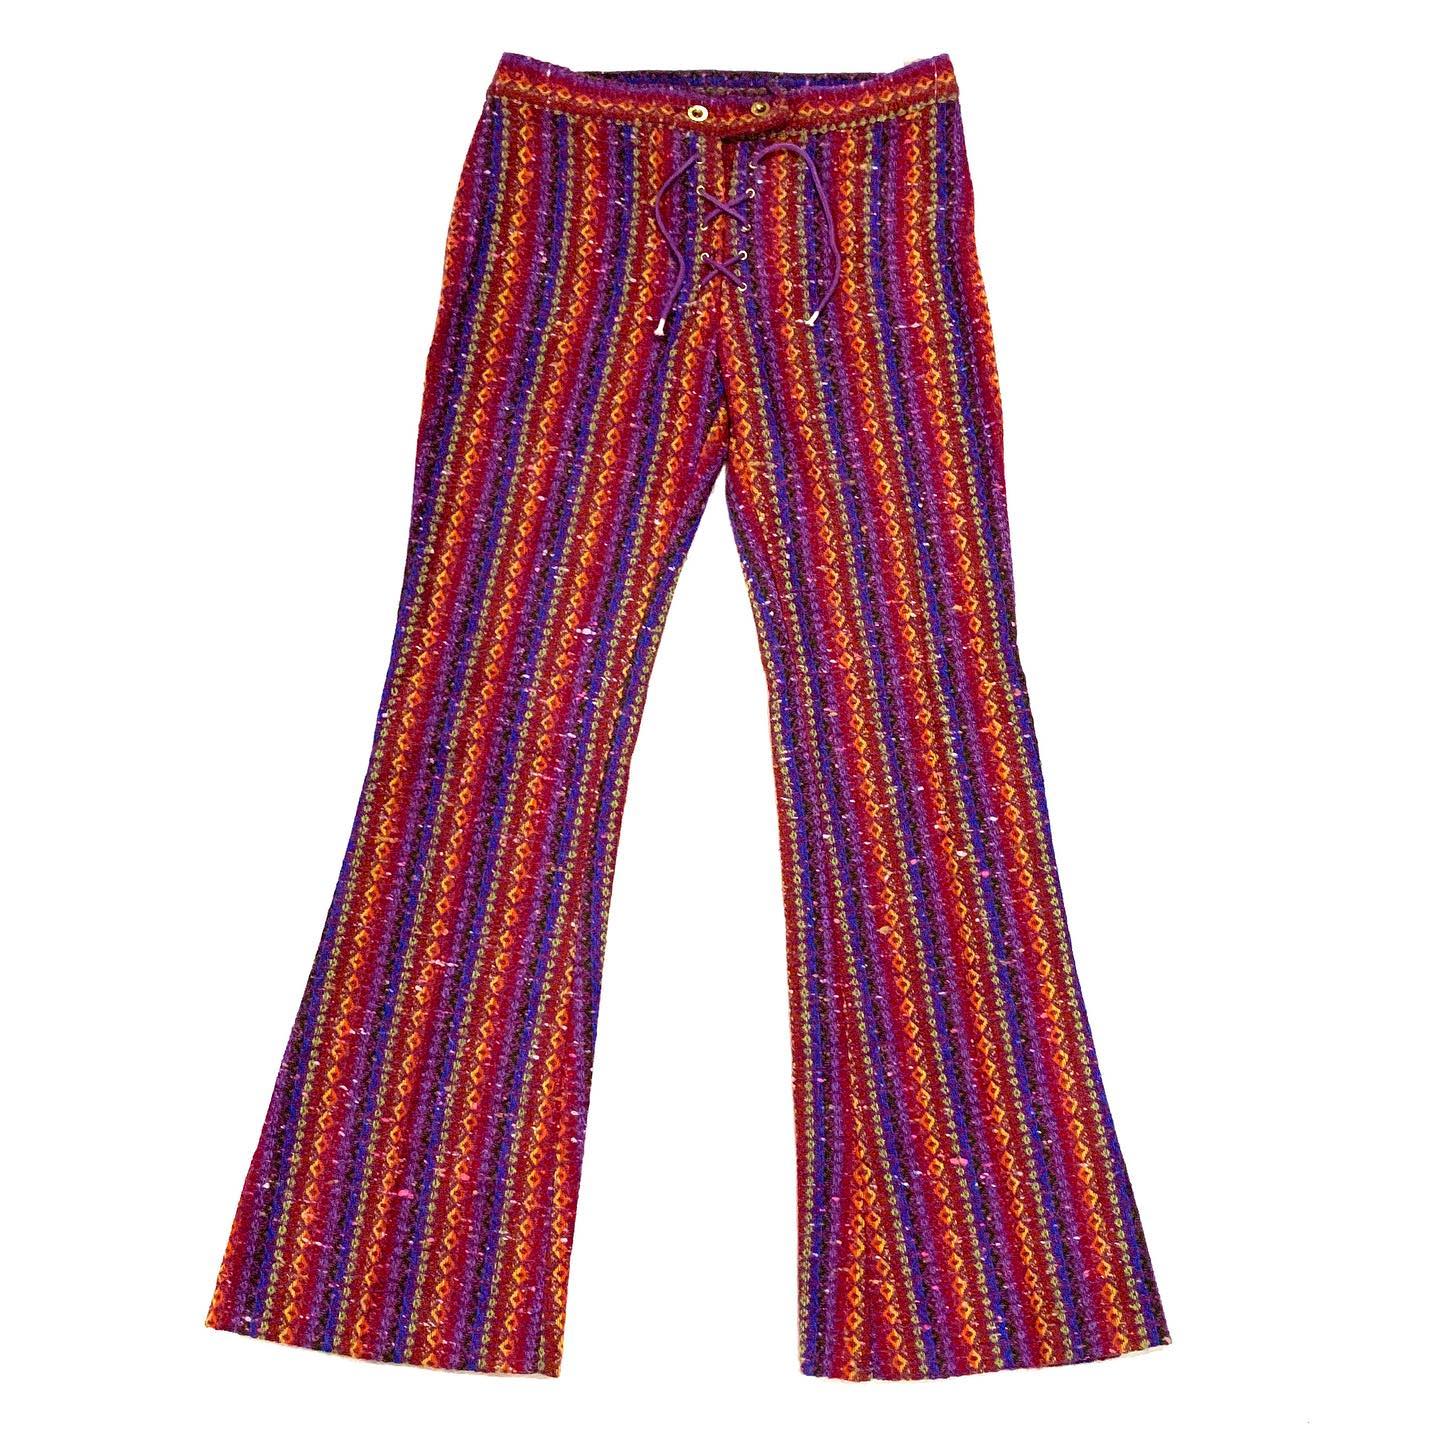 https://nvisionshop.com/wp-content/uploads/2020/06/Vintage-rainbow-stripe-woven-patterned-pants.jpg